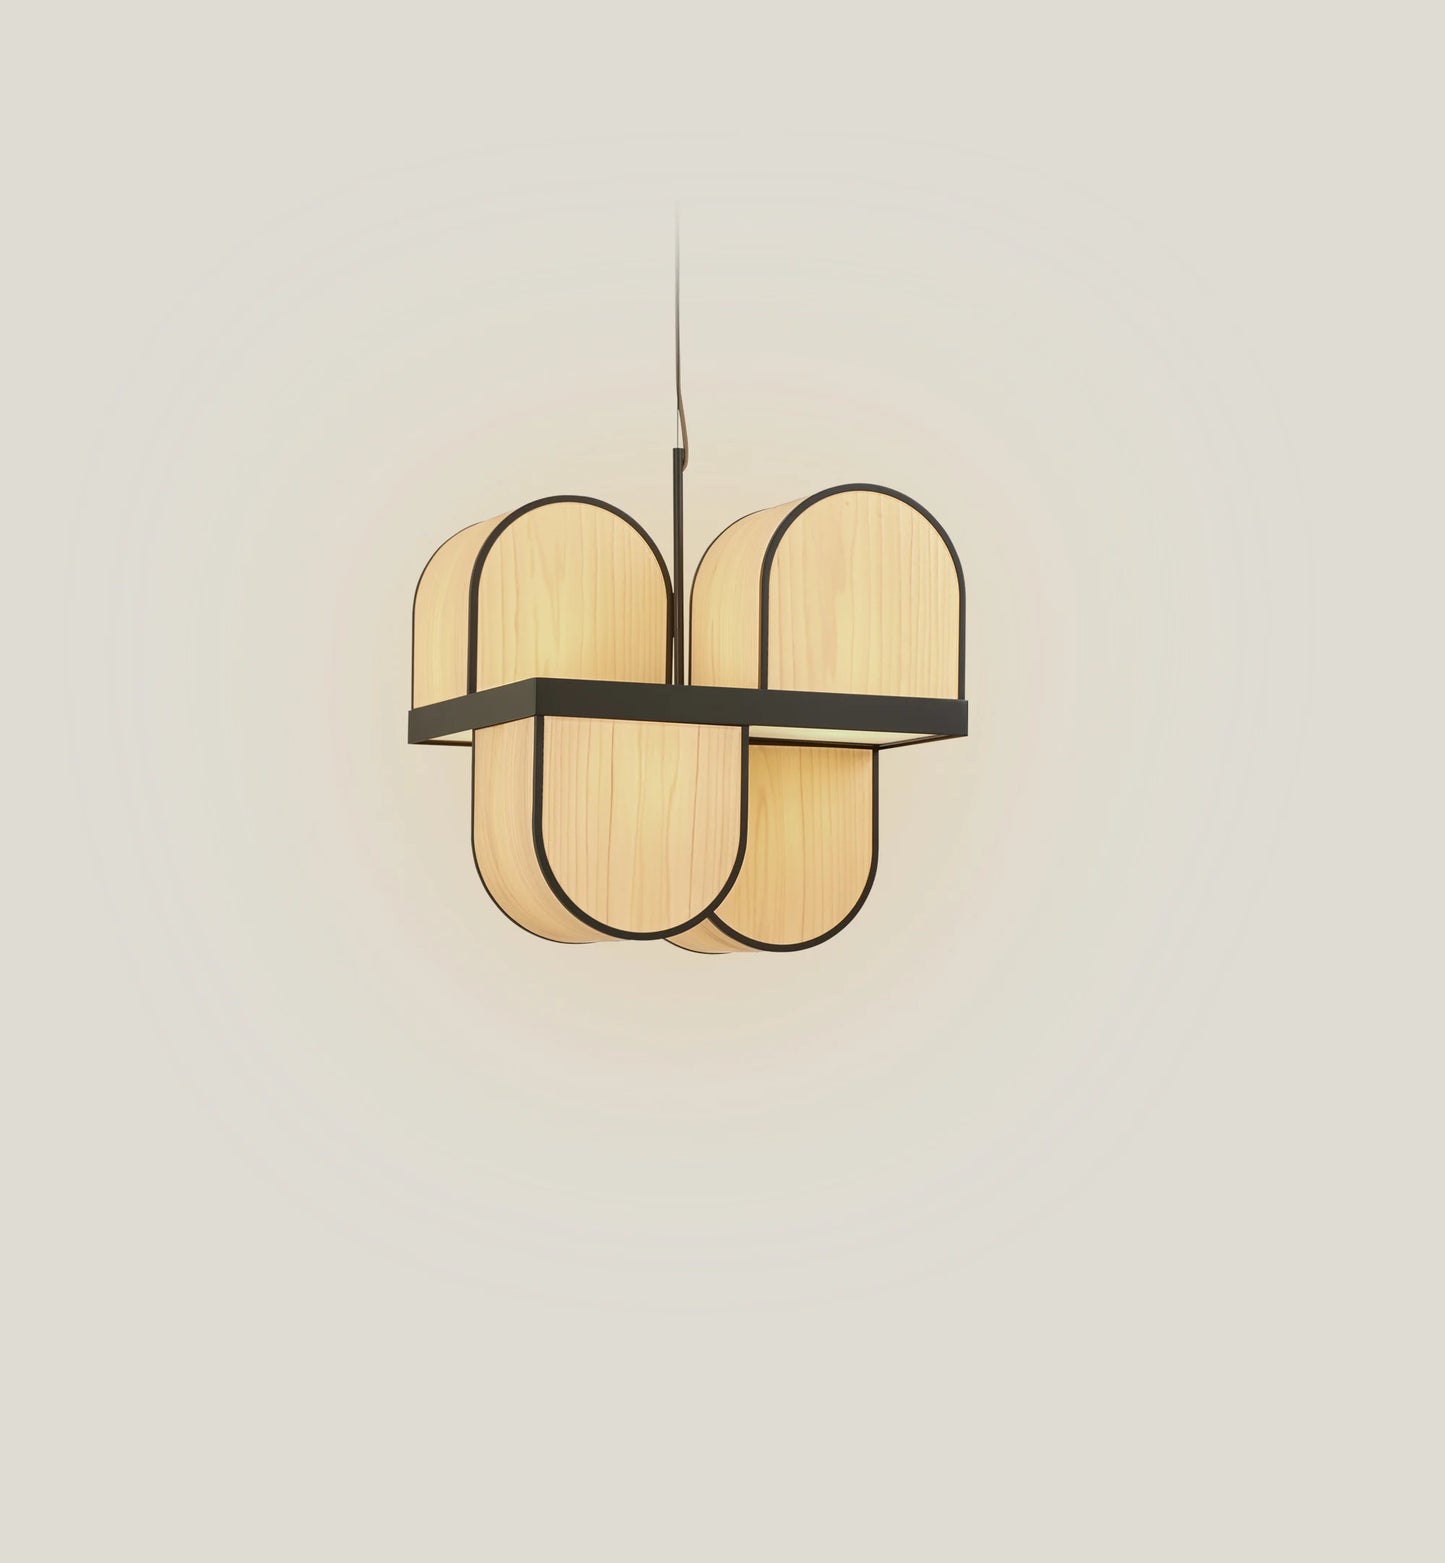 Wood Veneer white Suspended lamp. Bauhaus lighting. bauhaus design with midcentury Modern natural veneer